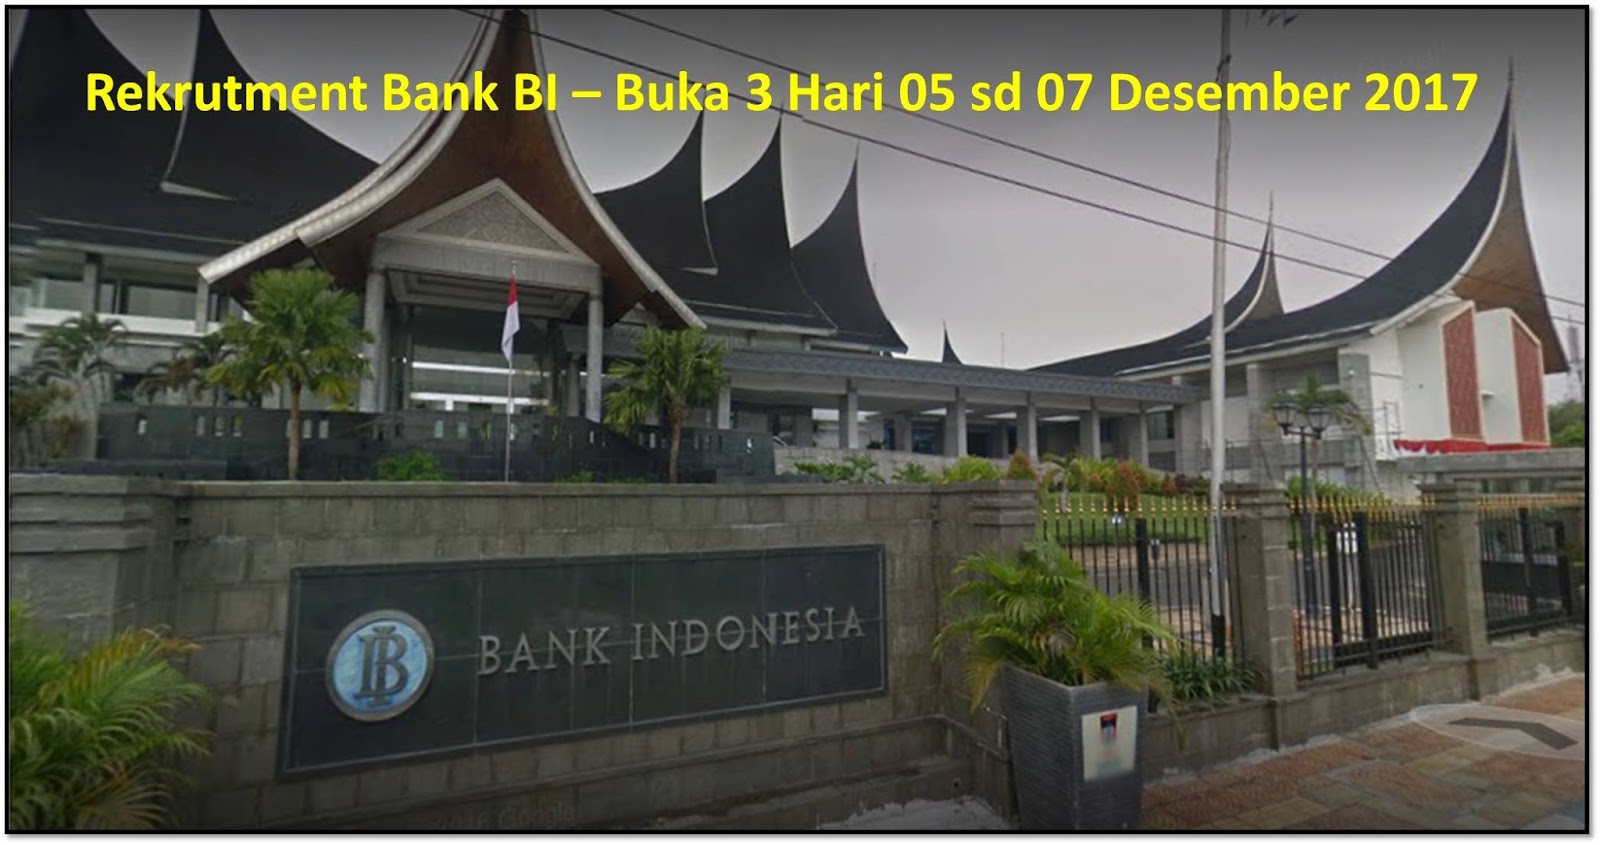 Rekrutment BI (Bank Indonesia) via email sd Kamis 07 